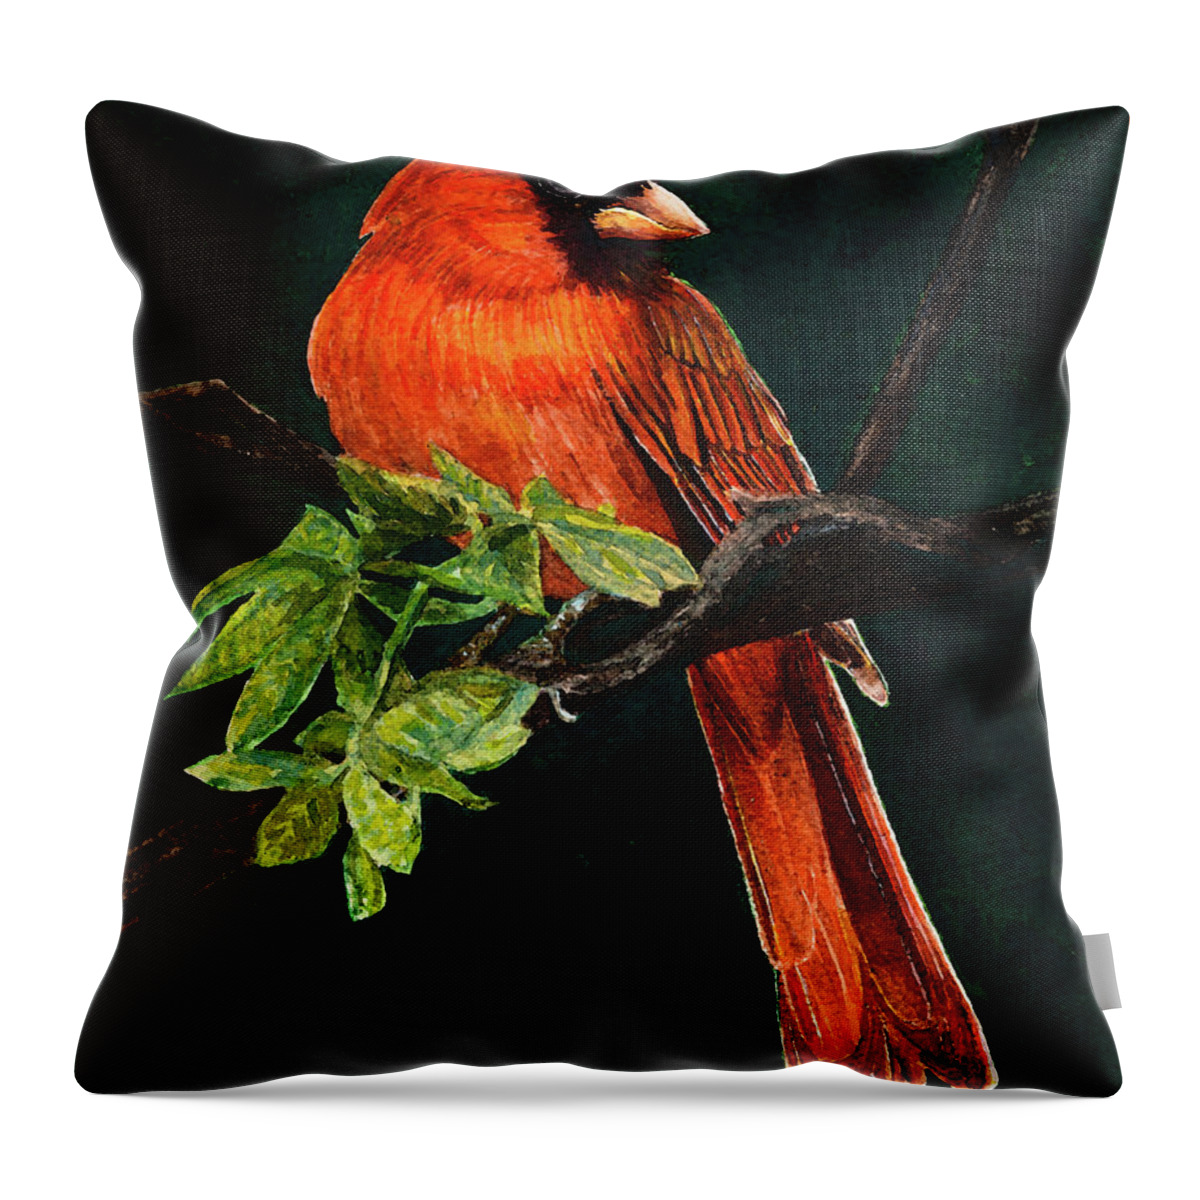 Bird Throw Pillow featuring the painting Cardinal by Douglas Castleman